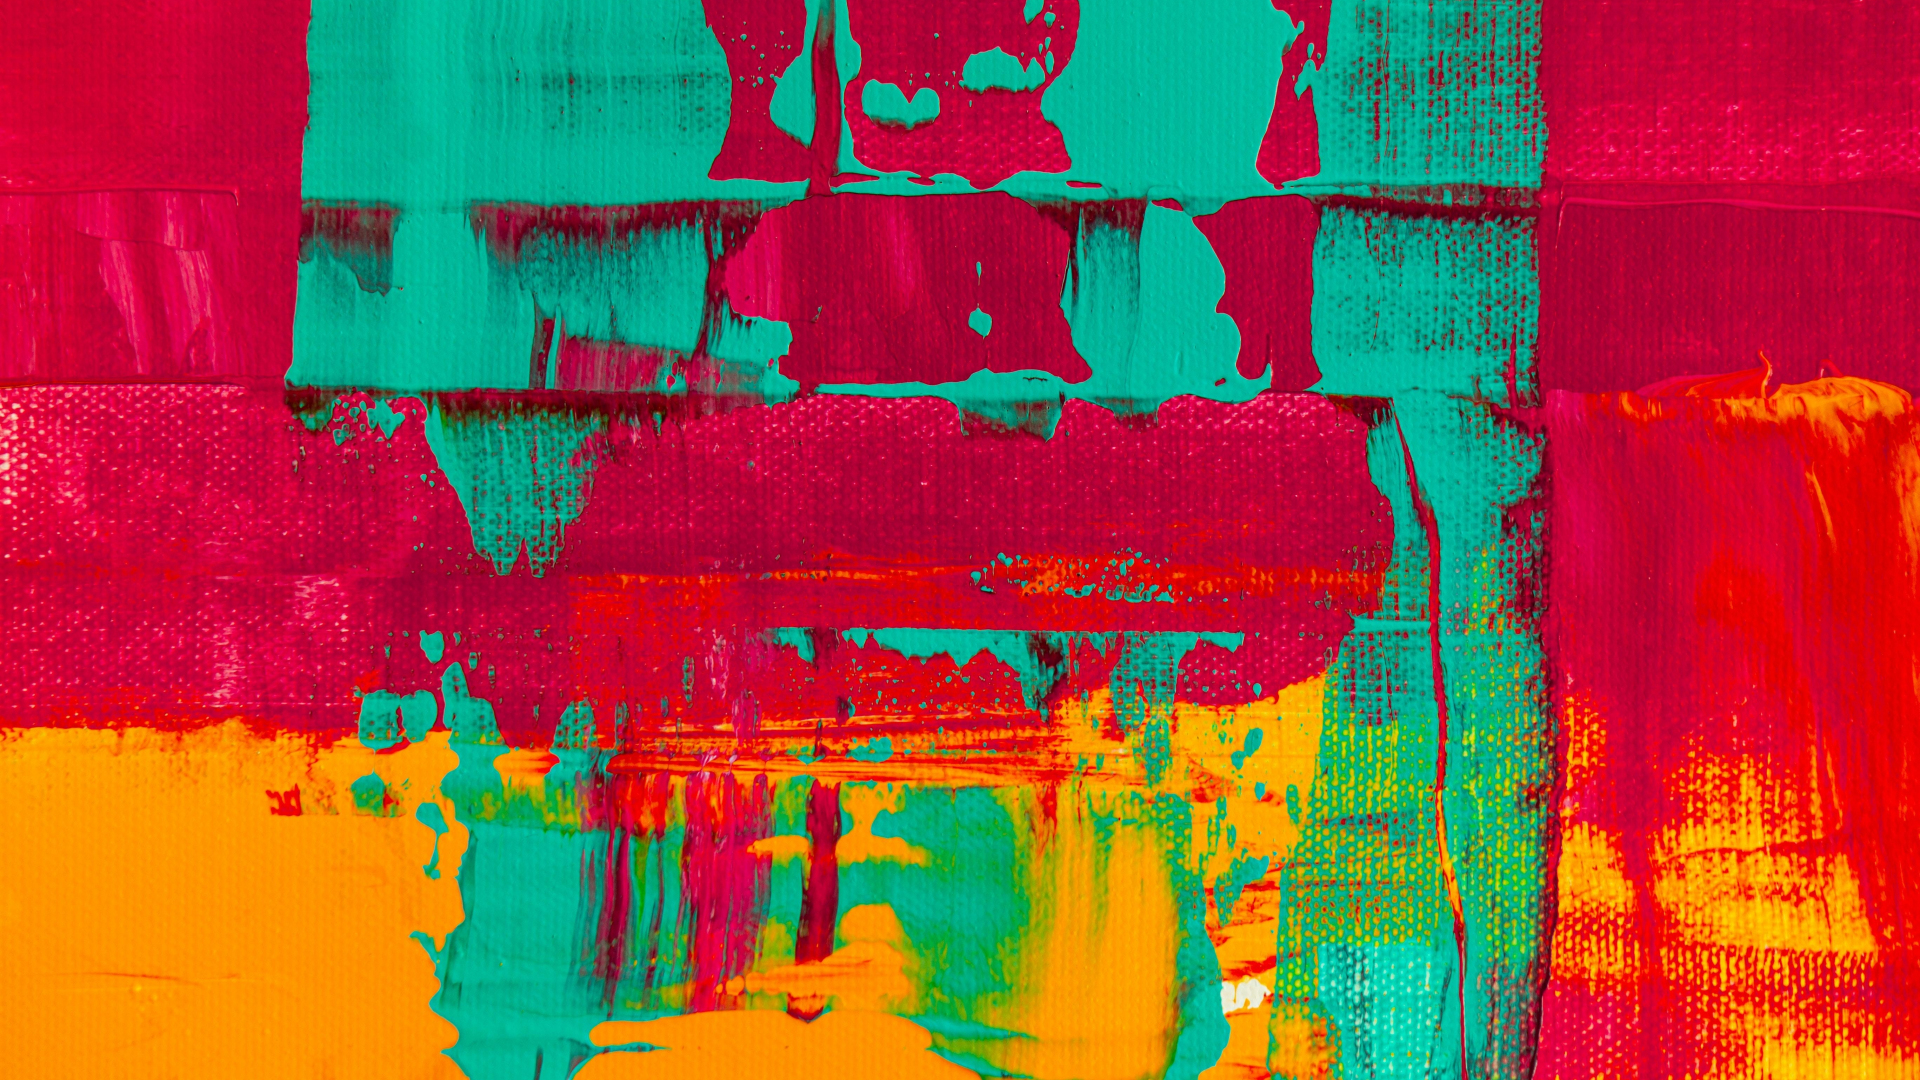 Download wallpaper 1920x1080 abstract, colorful, modern art, full hd, hdtv, fhd, 1080p wallpaper